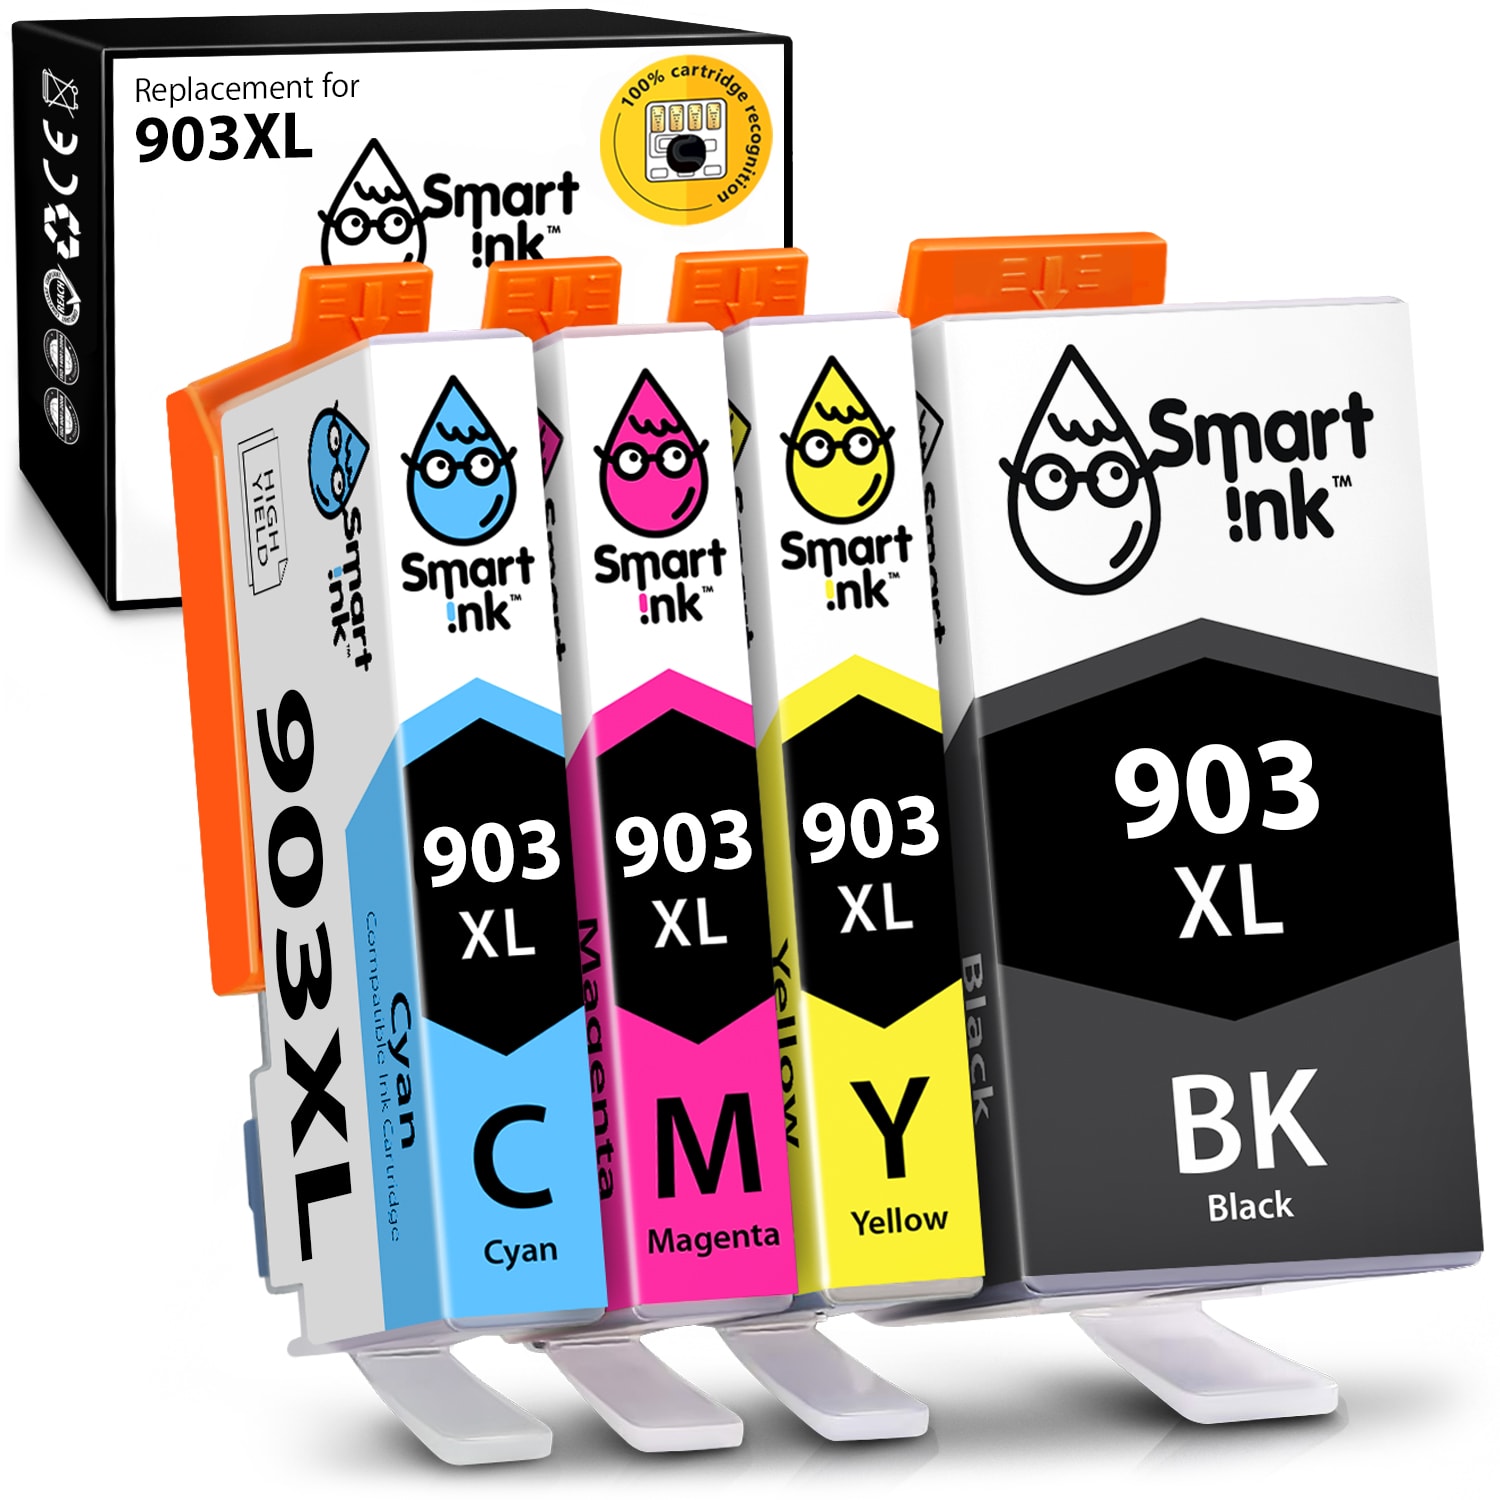 noodzaak neus Begroeten HP 903 XL (4 Pack) Ink Cartridge Replacement - Buy Printer Cartridges in EU  at the best price | Smart Ink